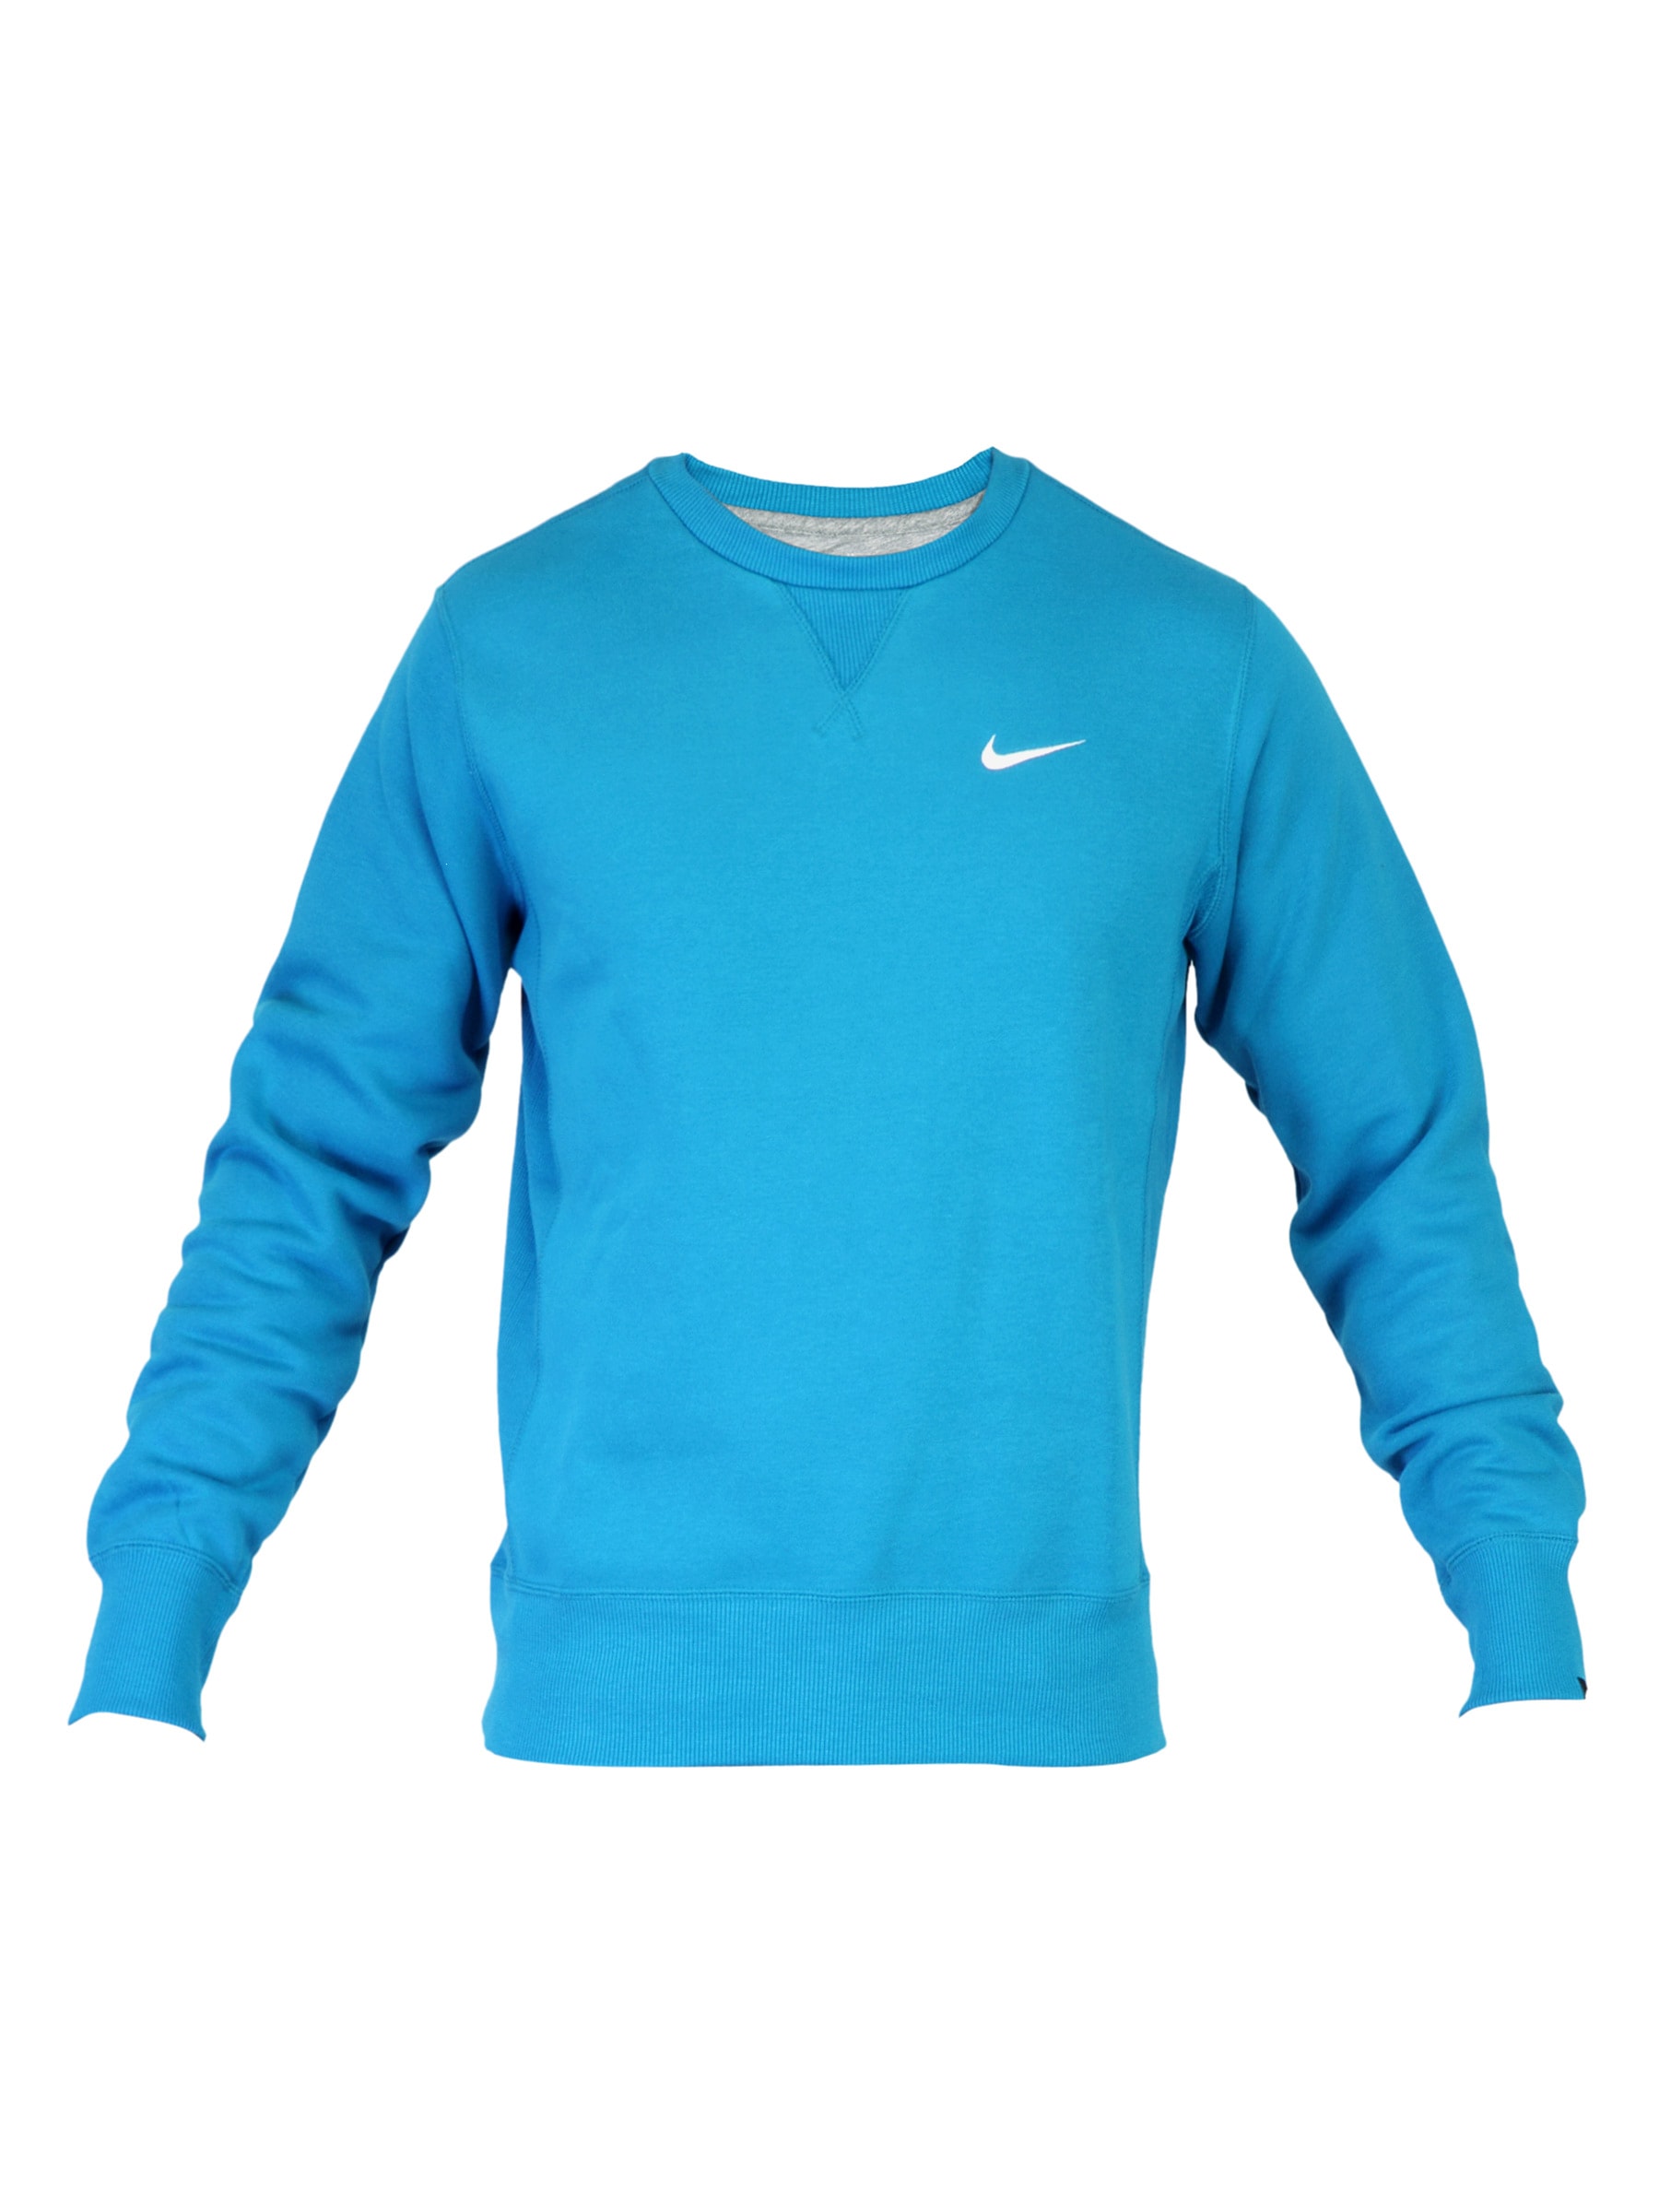 Nike Men Solid Blue Sweatshirts